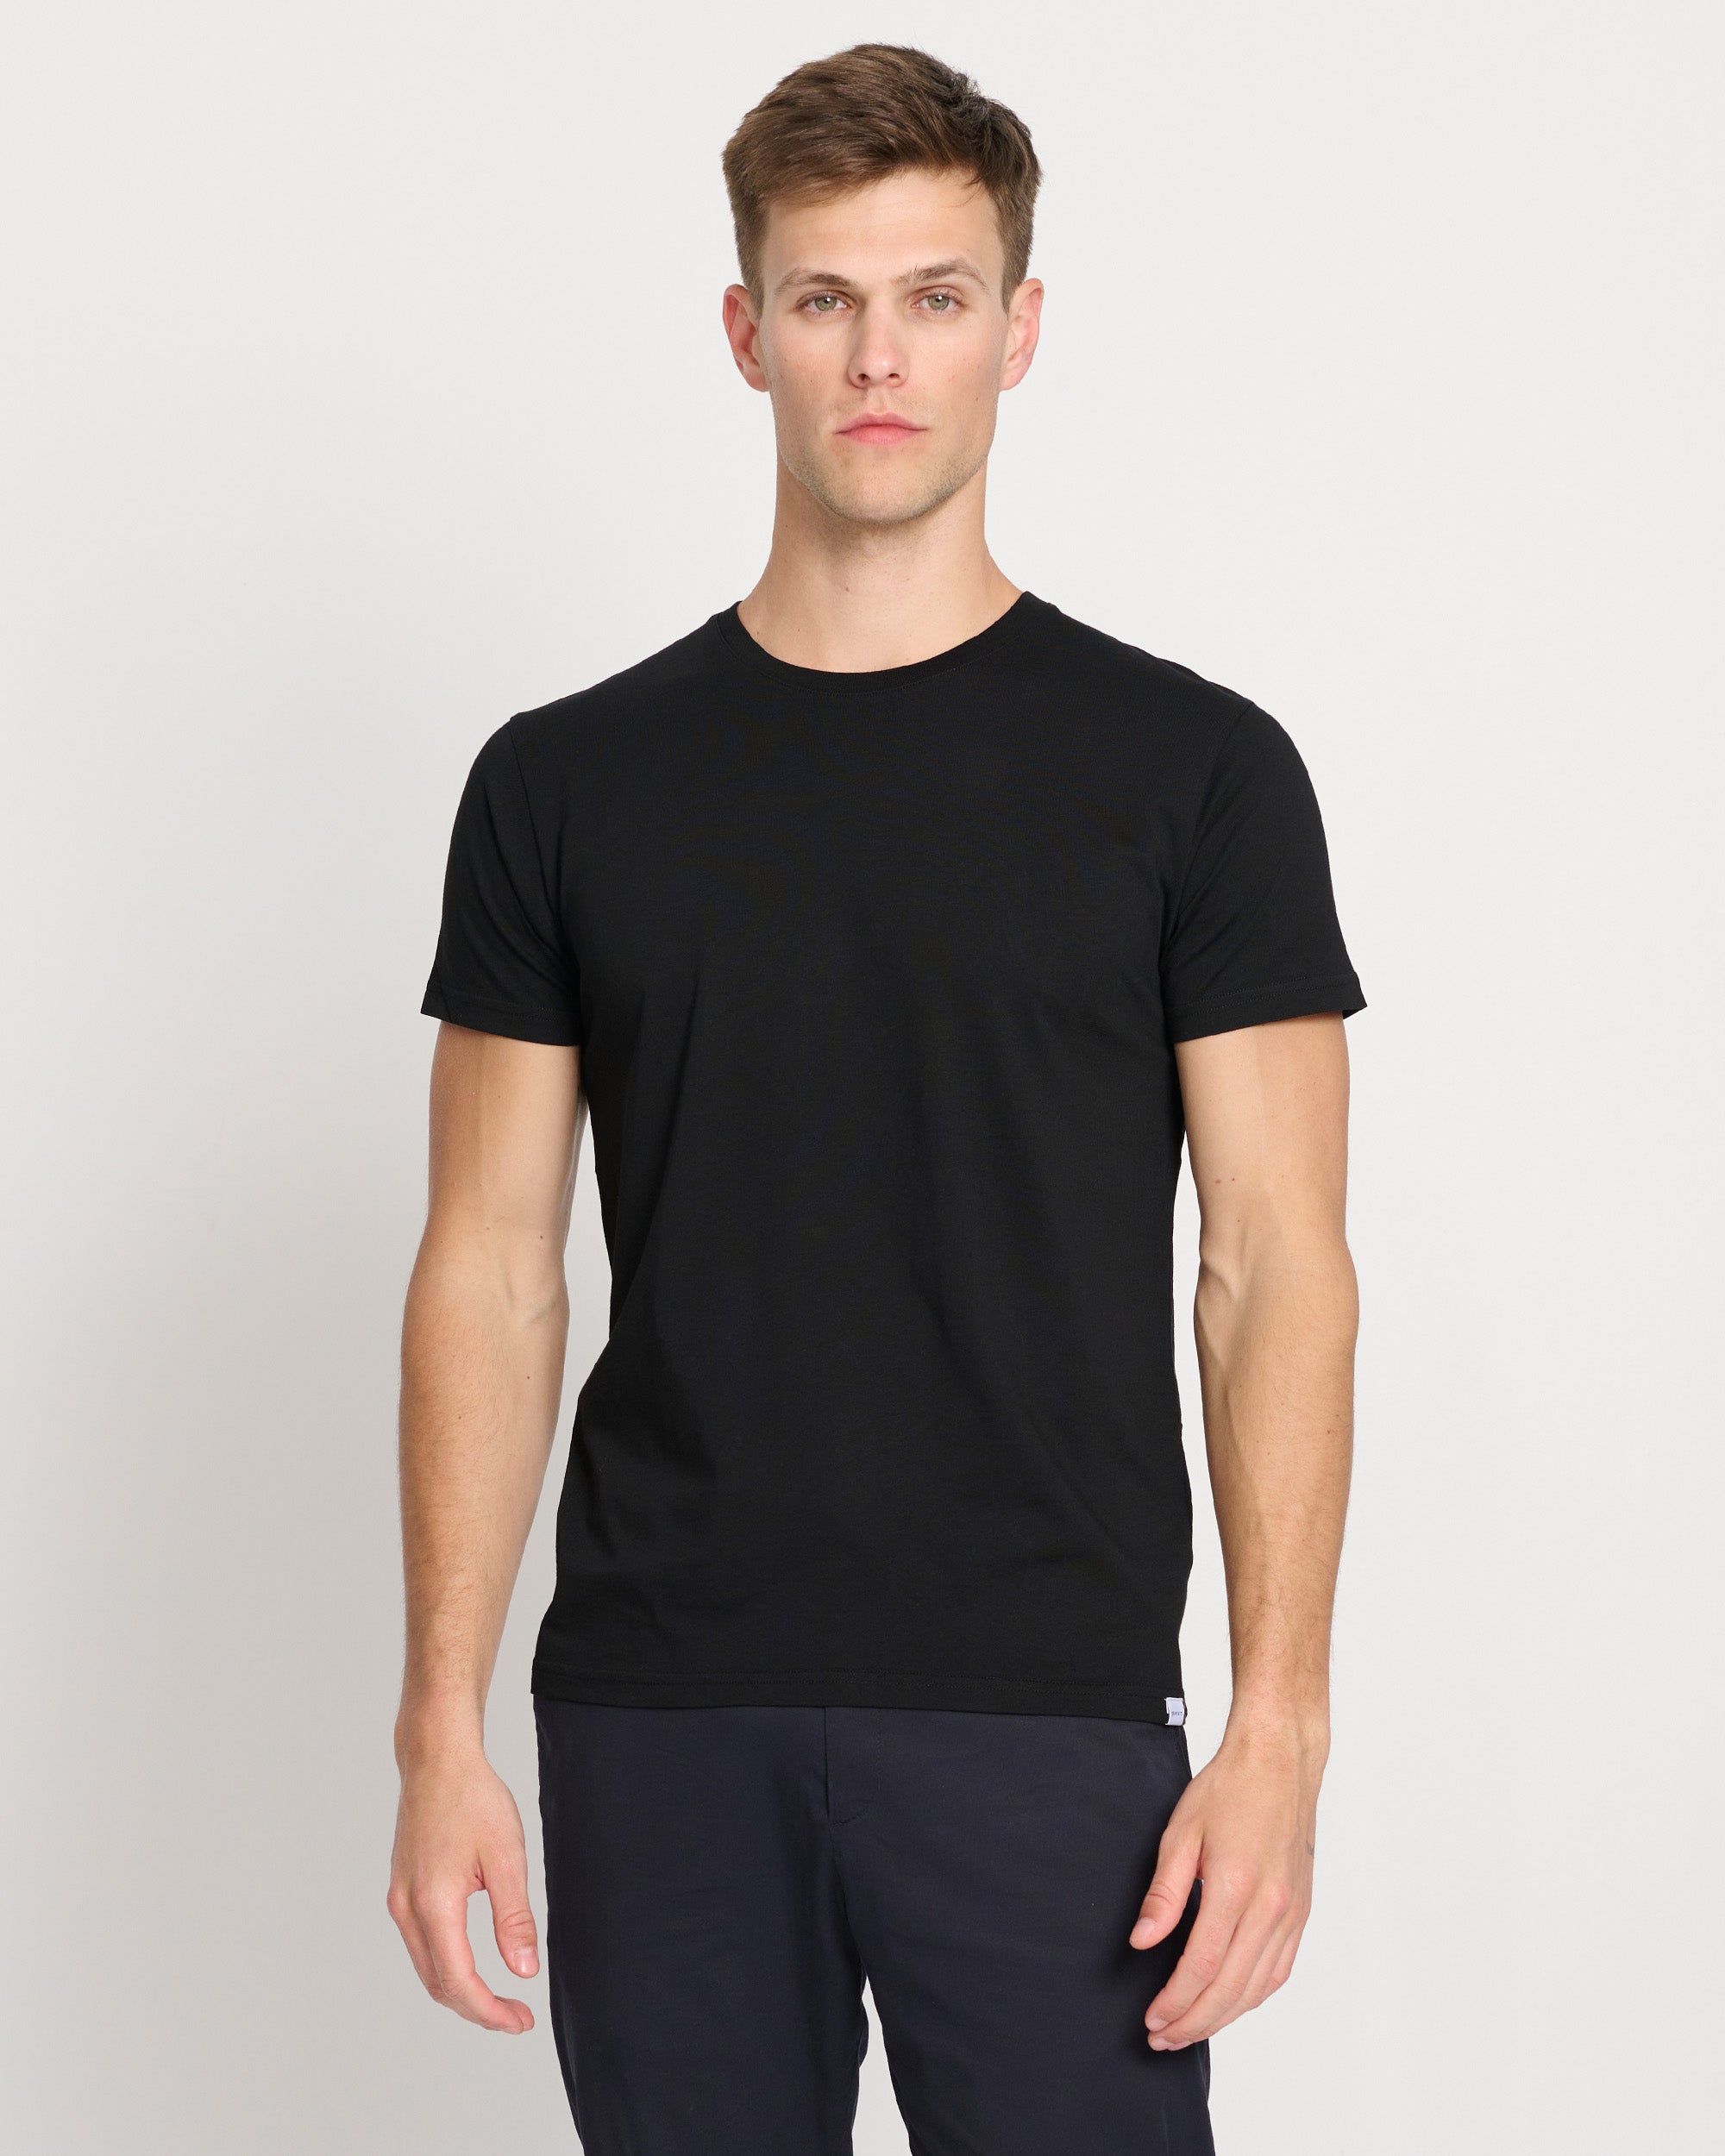 The Perfect Black T-Shirt for Men | Premium 185GSM Cotton